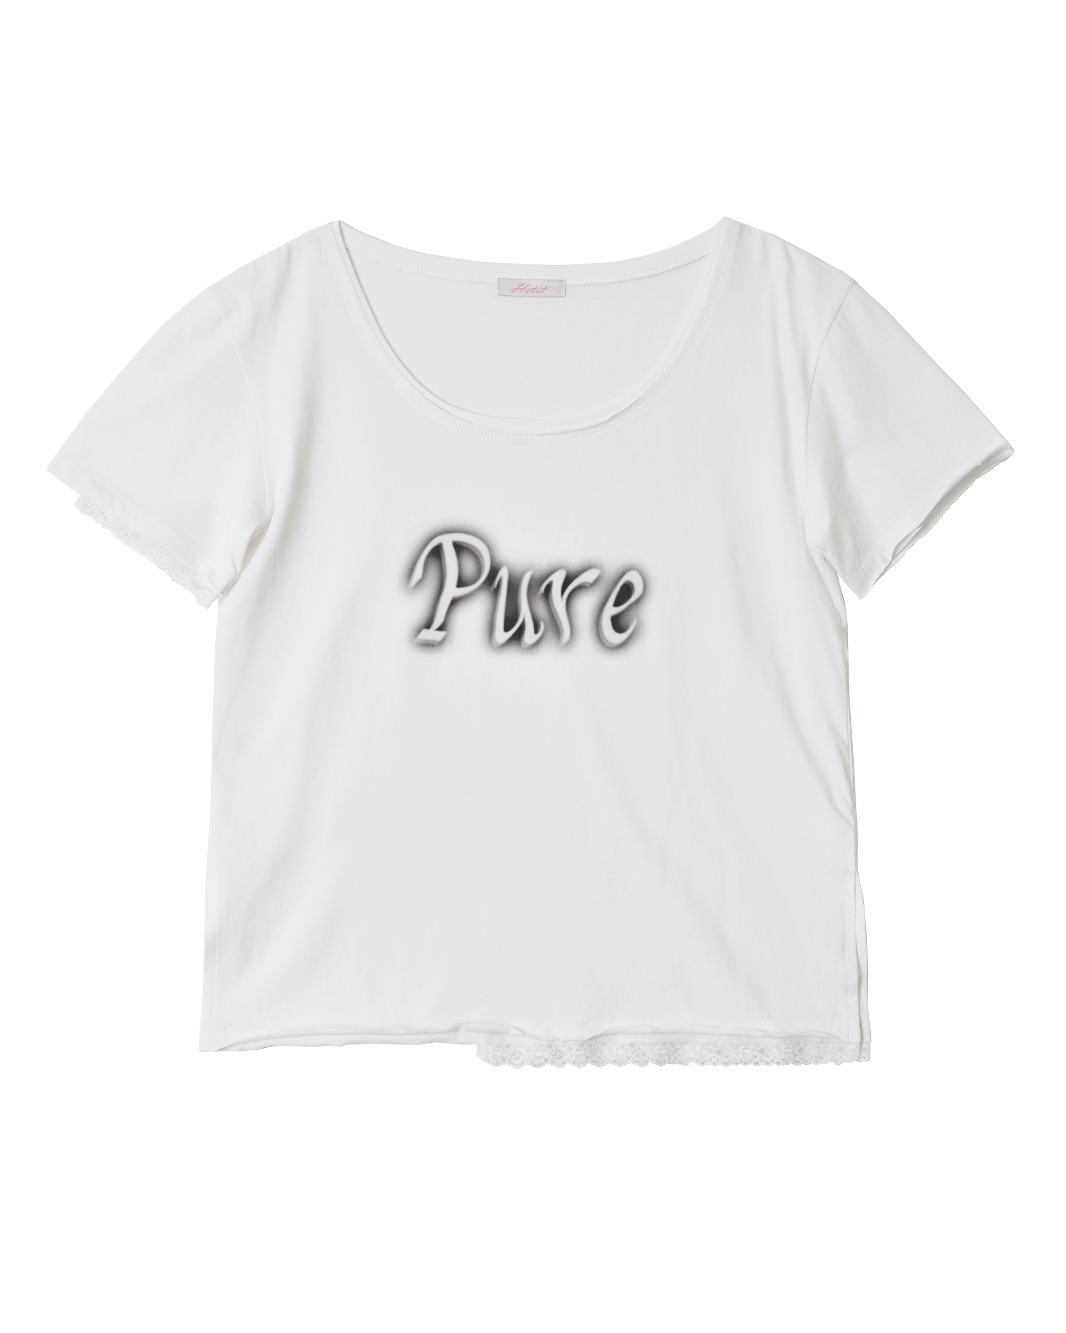 Pure Grunge T-shirt (White) (Pre-order ~5/10)